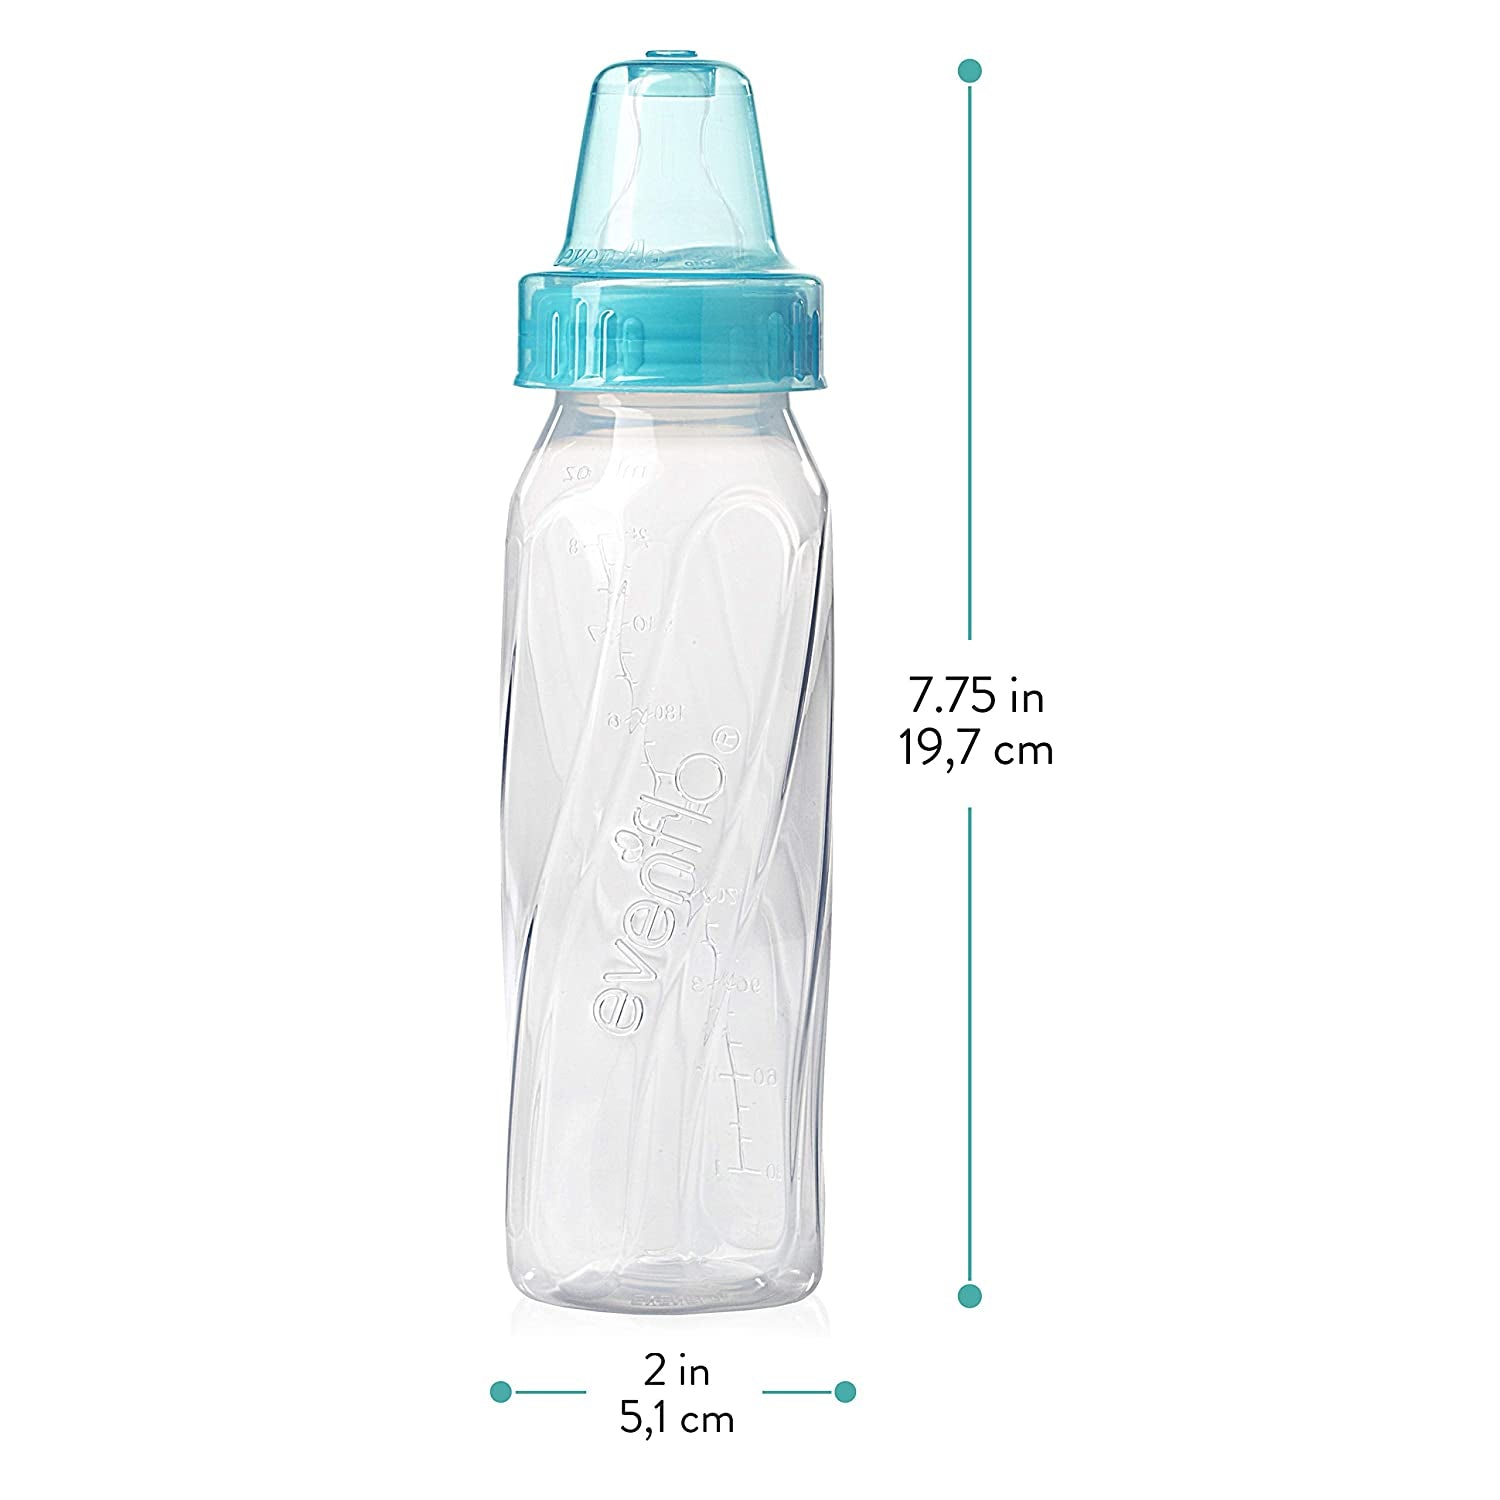 Evenflo Feeding Classic Plastic Baby Bottles, Color, 3 Pack - 8 oz